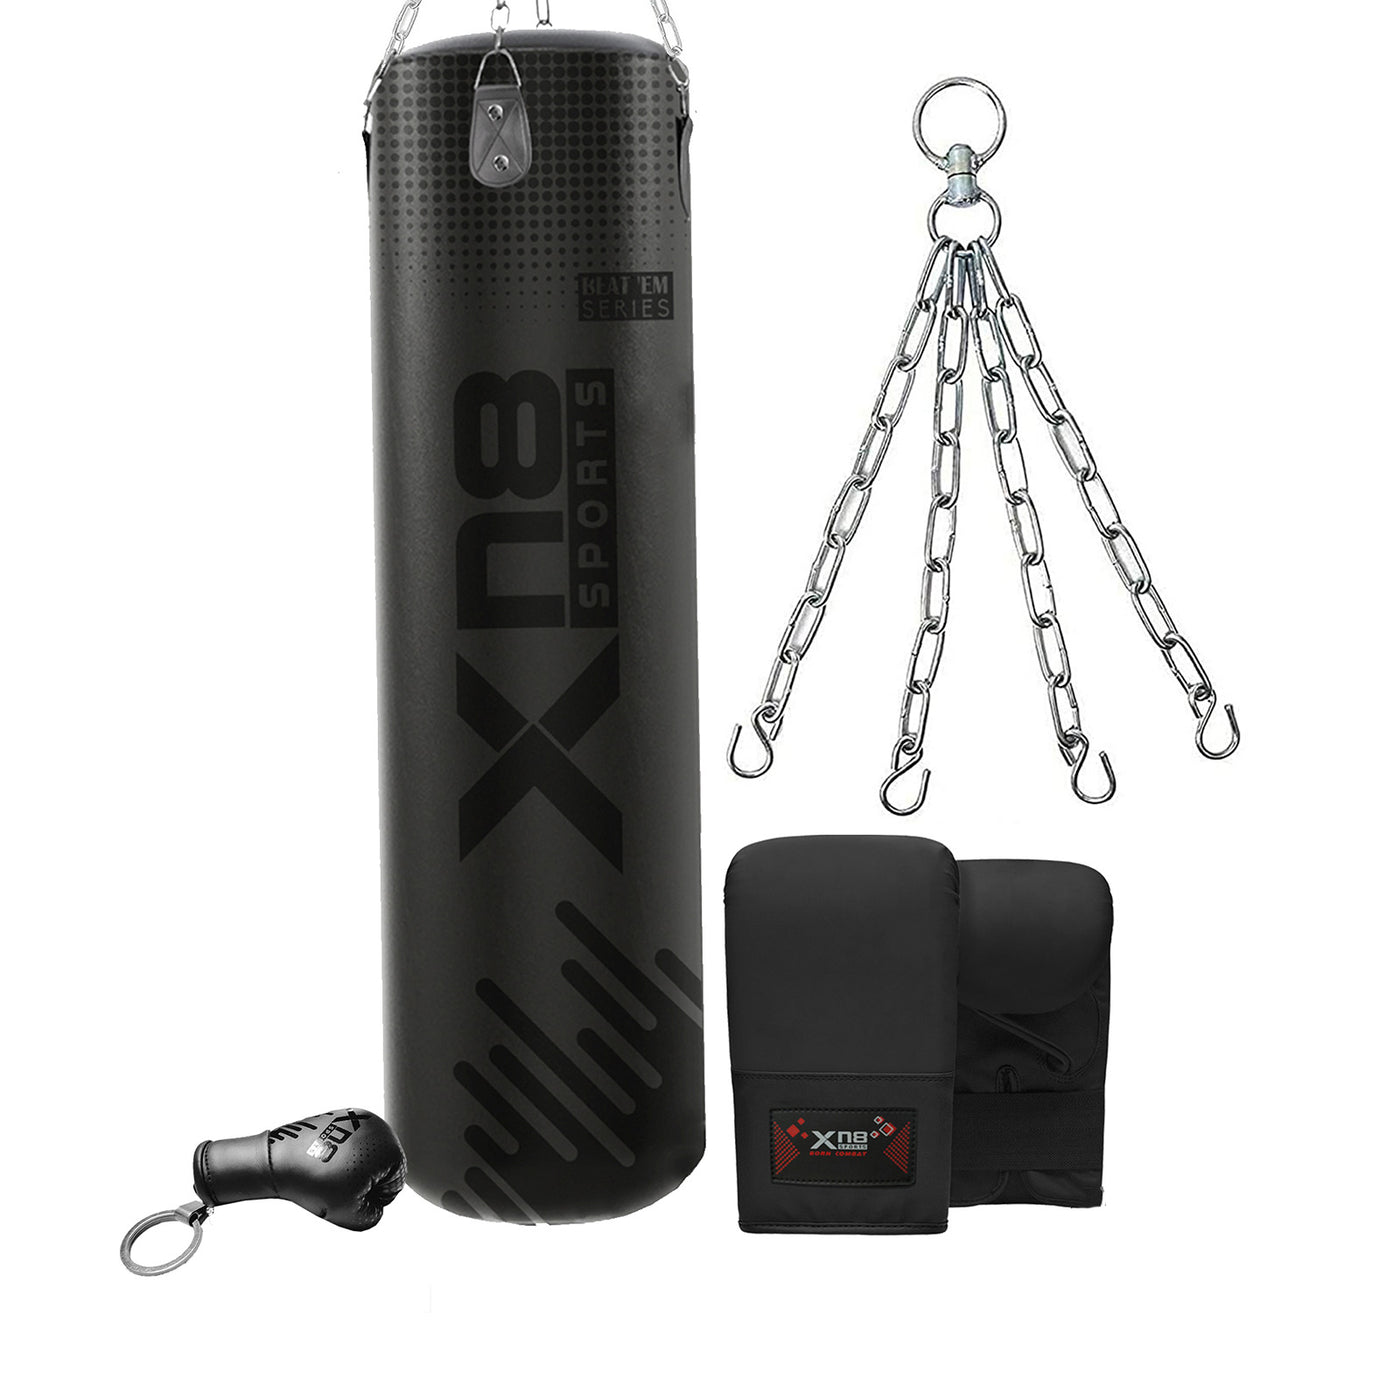 XN8 Sports Punch Bag, Mitts & keychain